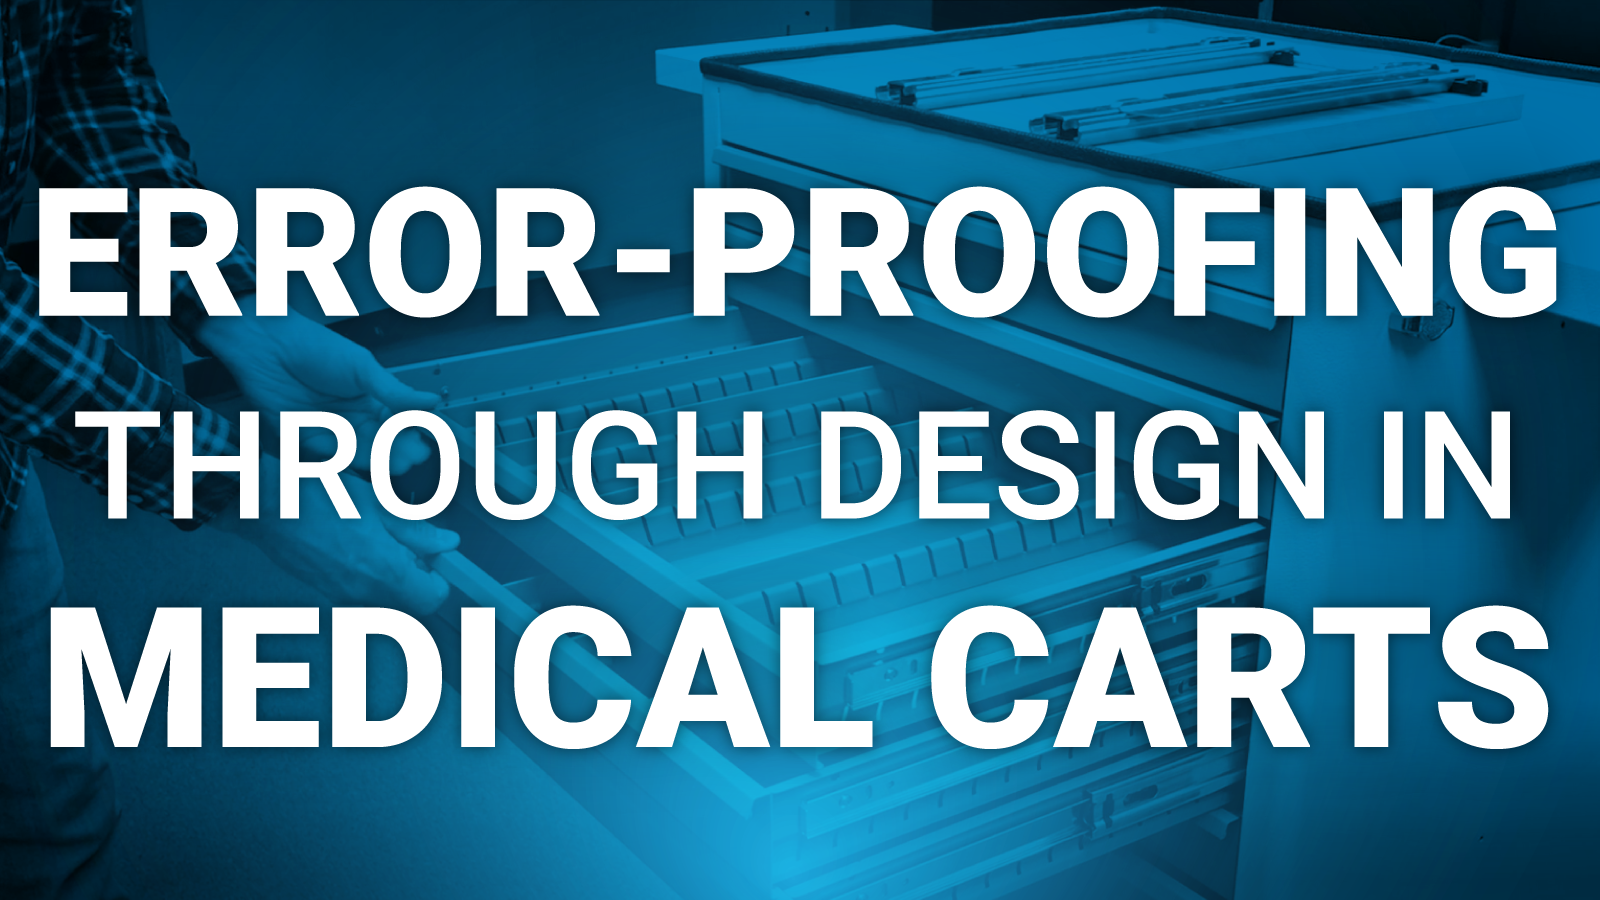 Custom Medical Cart Error-Proofing